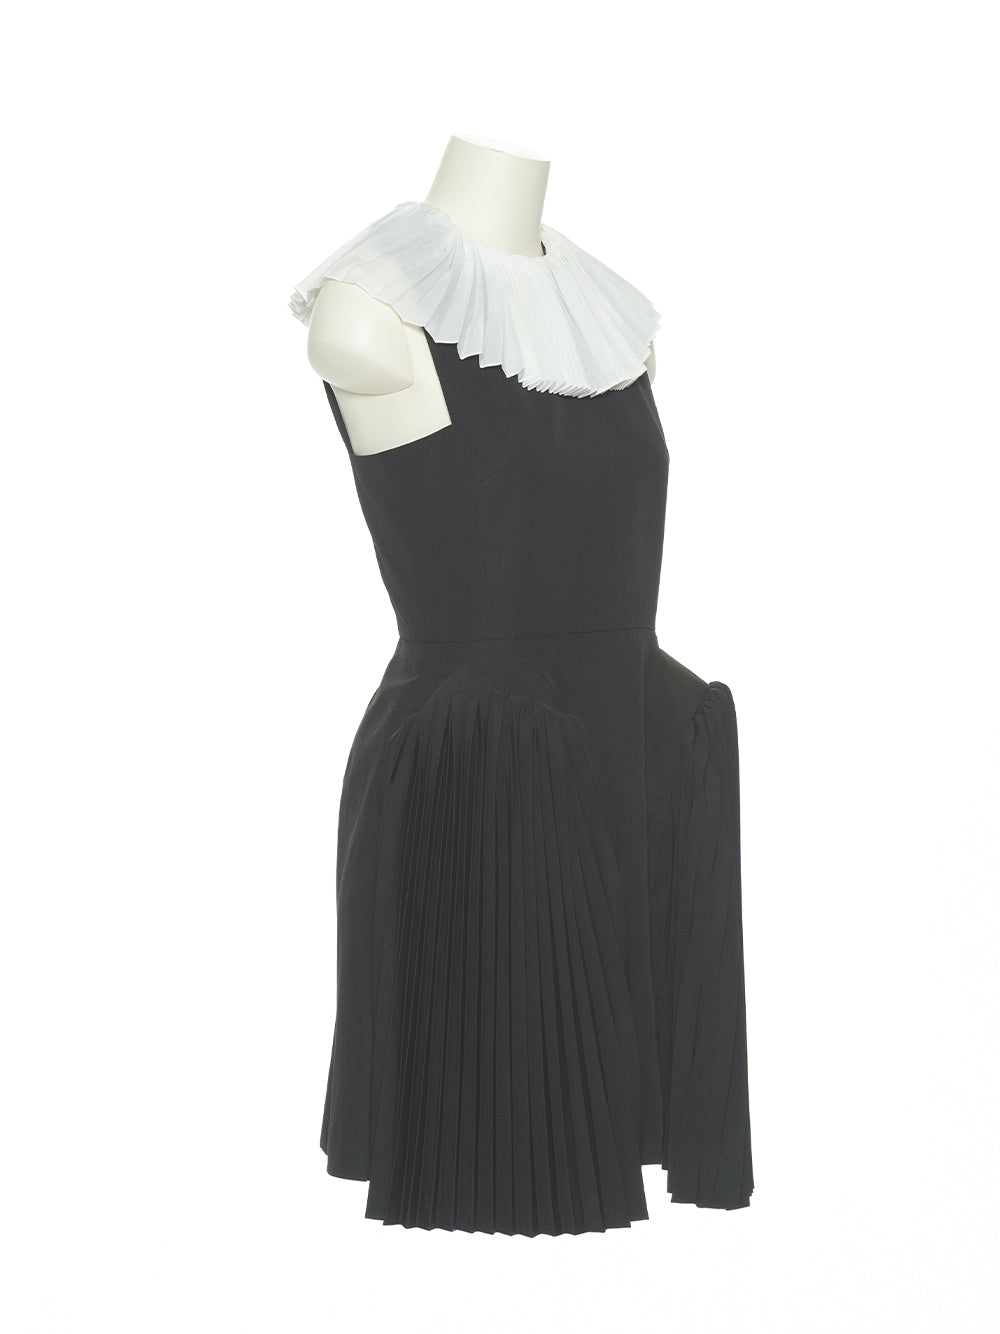 Accordion Pleated Dress (Black)